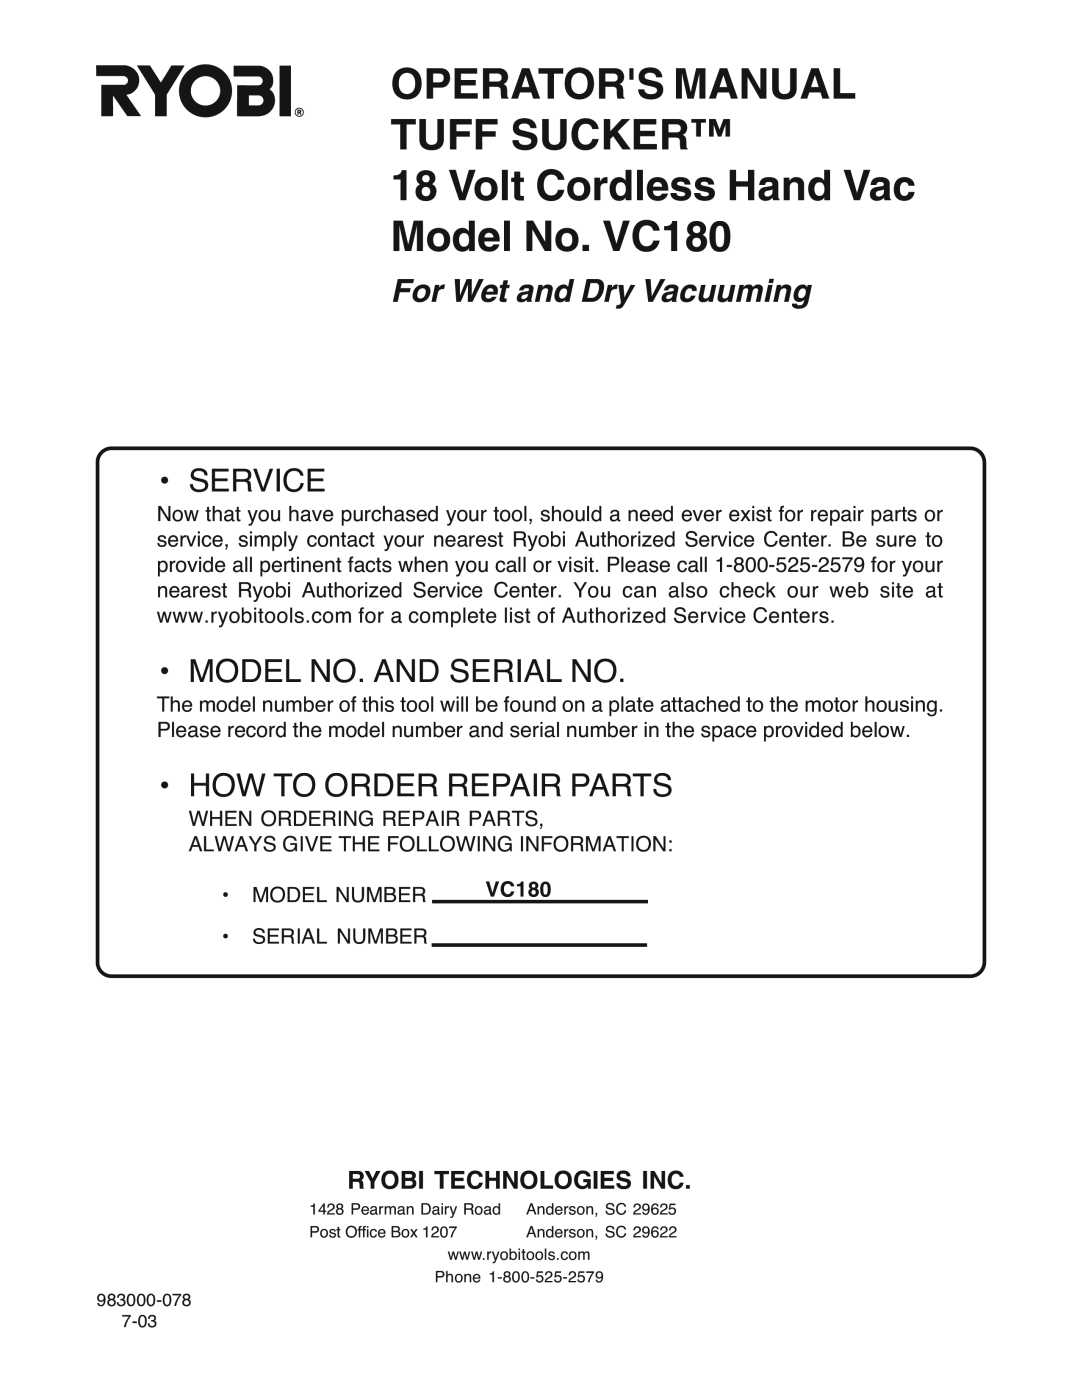 Ryobi manual Operators Manual Tuff Sucker, Volt Cordless Hand Vac Model No. VC180, For Wet and Dry Vacuuming, Service 